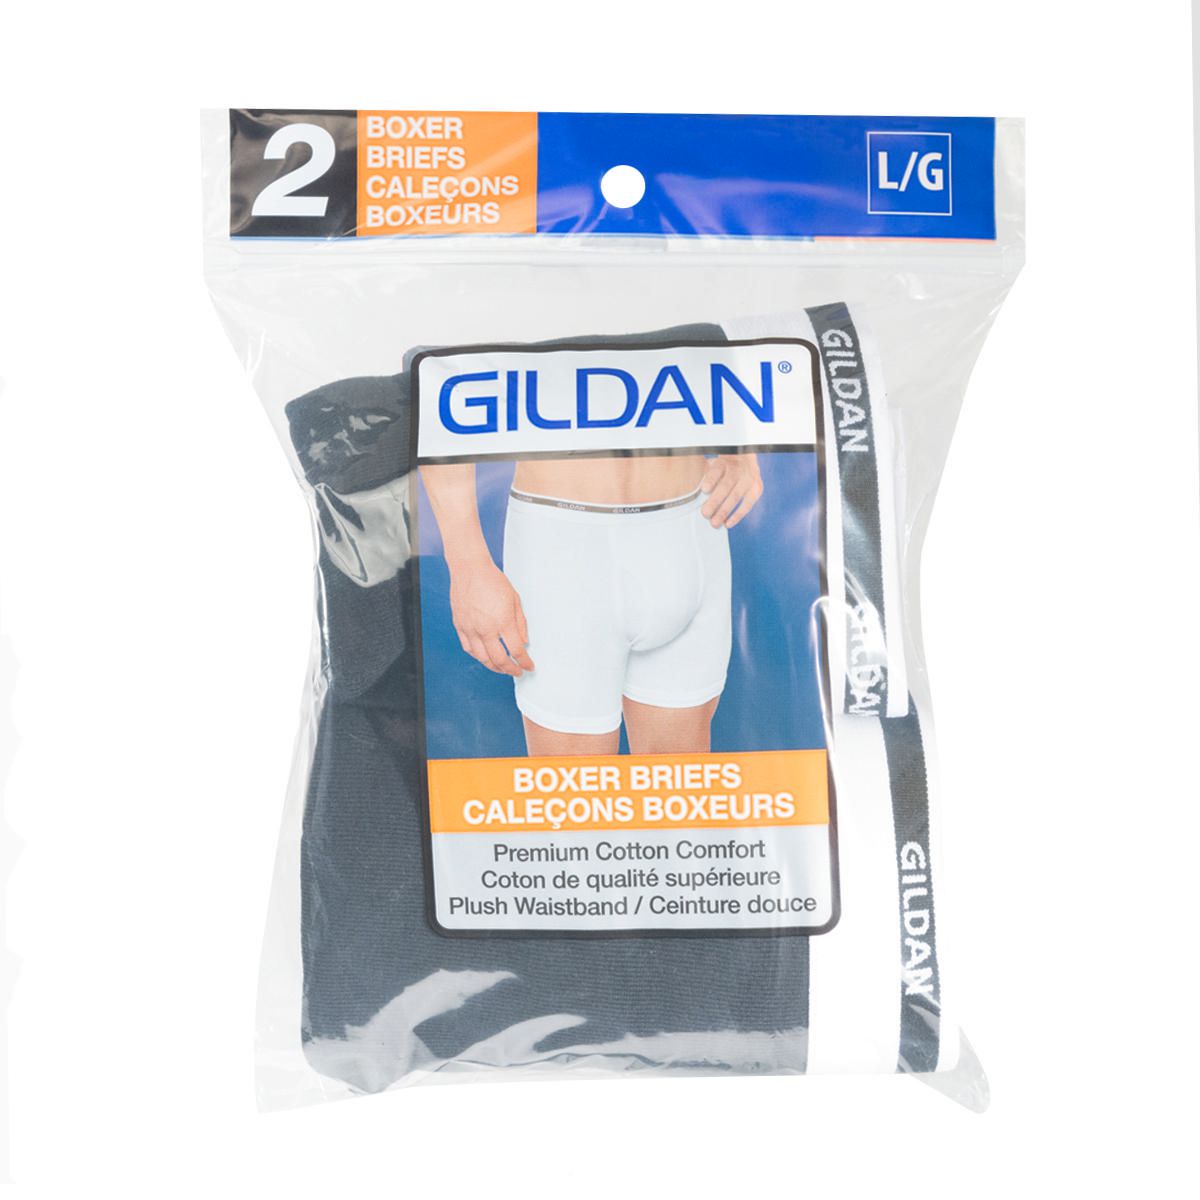 Gildan Men's Boxer Briefs, 3-Pack